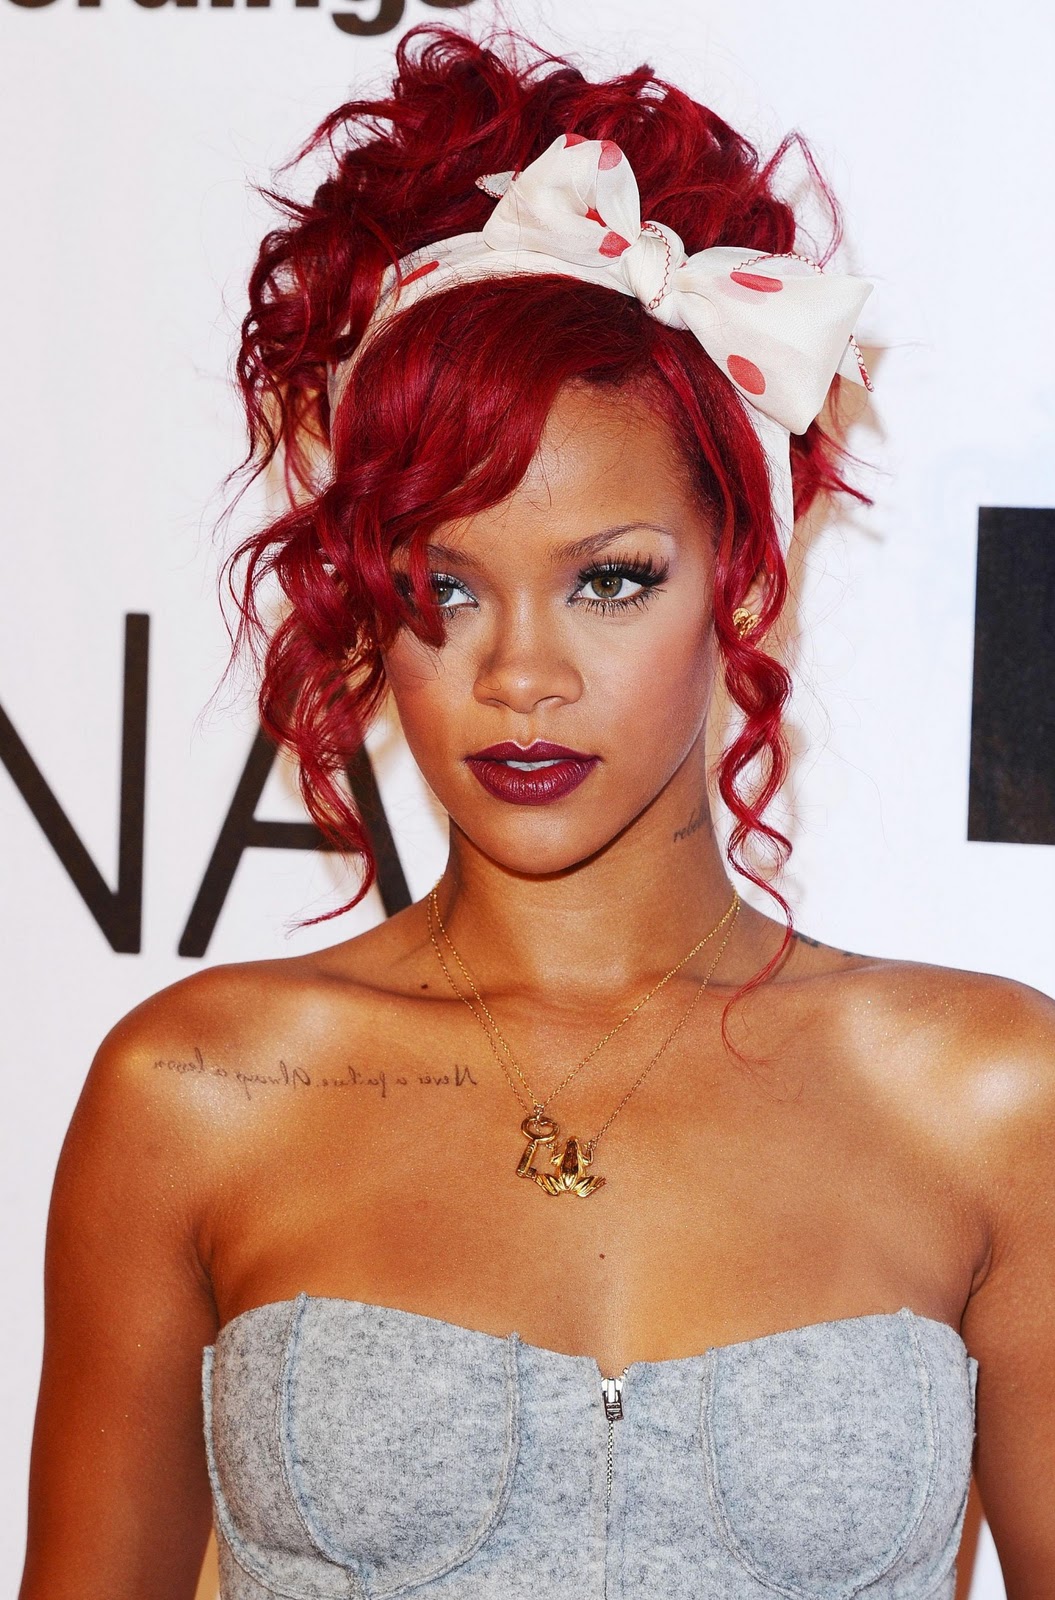 http://2.bp.blogspot.com/-bOejY7zIqgo/URoBqefNsFI/AAAAAAAAdVk/T3NYcjkMvpI/s1600/Rihanna-Red-Hair.jpg